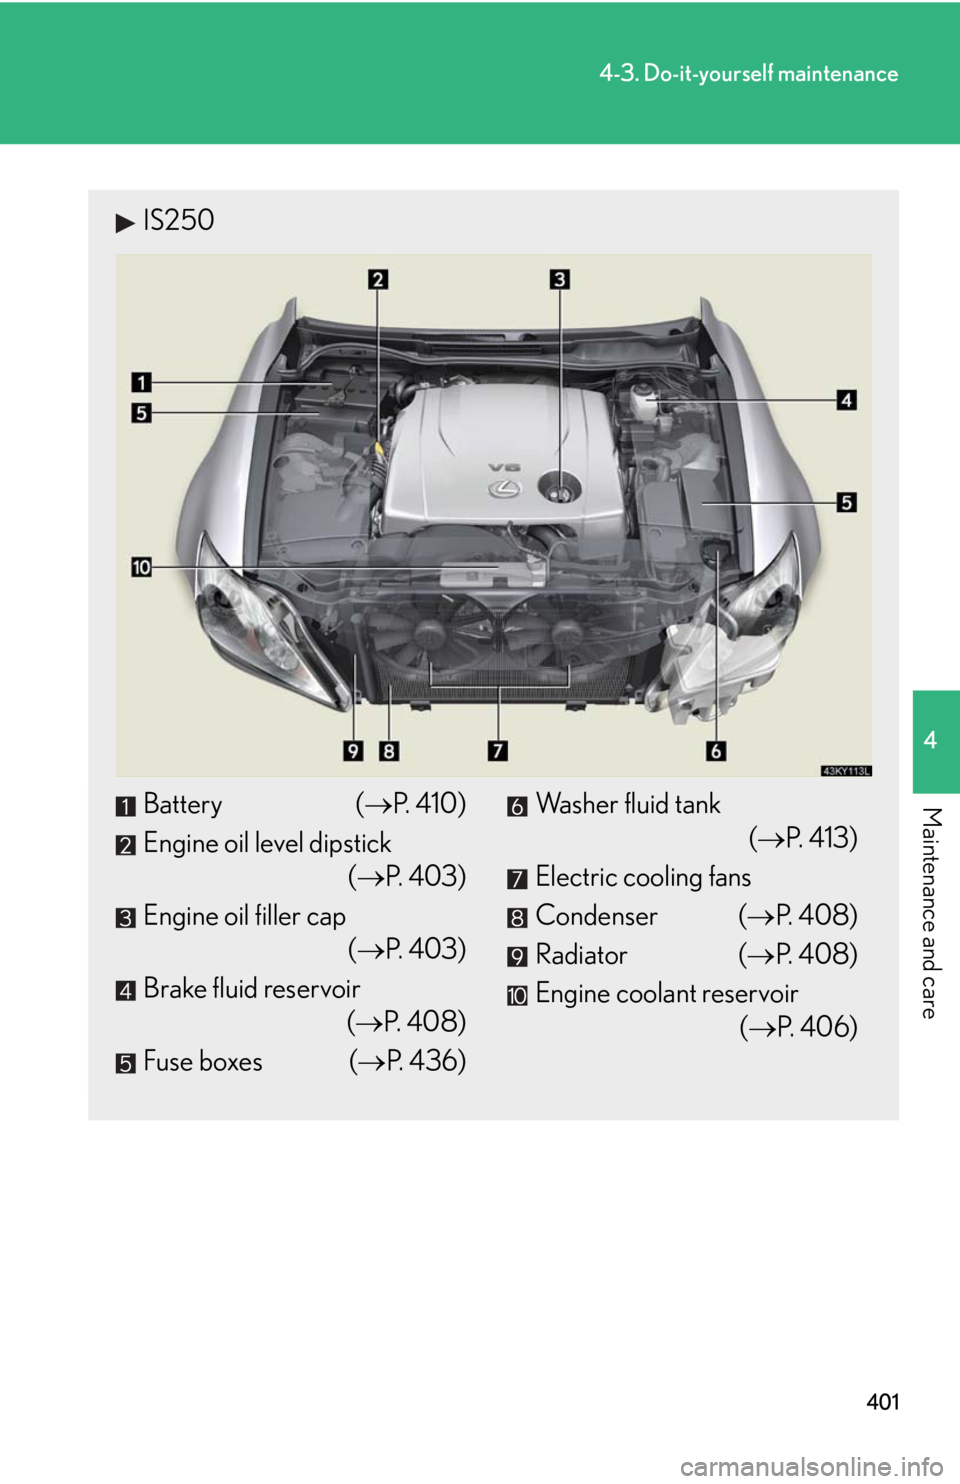 Lexus IS250 2010  Do-It-Yourself Maintenance / LEXUS 2010 IS350 IS250 OWNERS MANUAL (OM53A23U) 401
4-3. Do-it-yourself maintenance
4
Maintenance and care
IS250
Battery (P. 410)
Engine oil level dipstick
(P. 403)
Engine oil filler cap
(P. 403)
Brake fluid reservoir
(P.  4 0 8 )
Fuse 